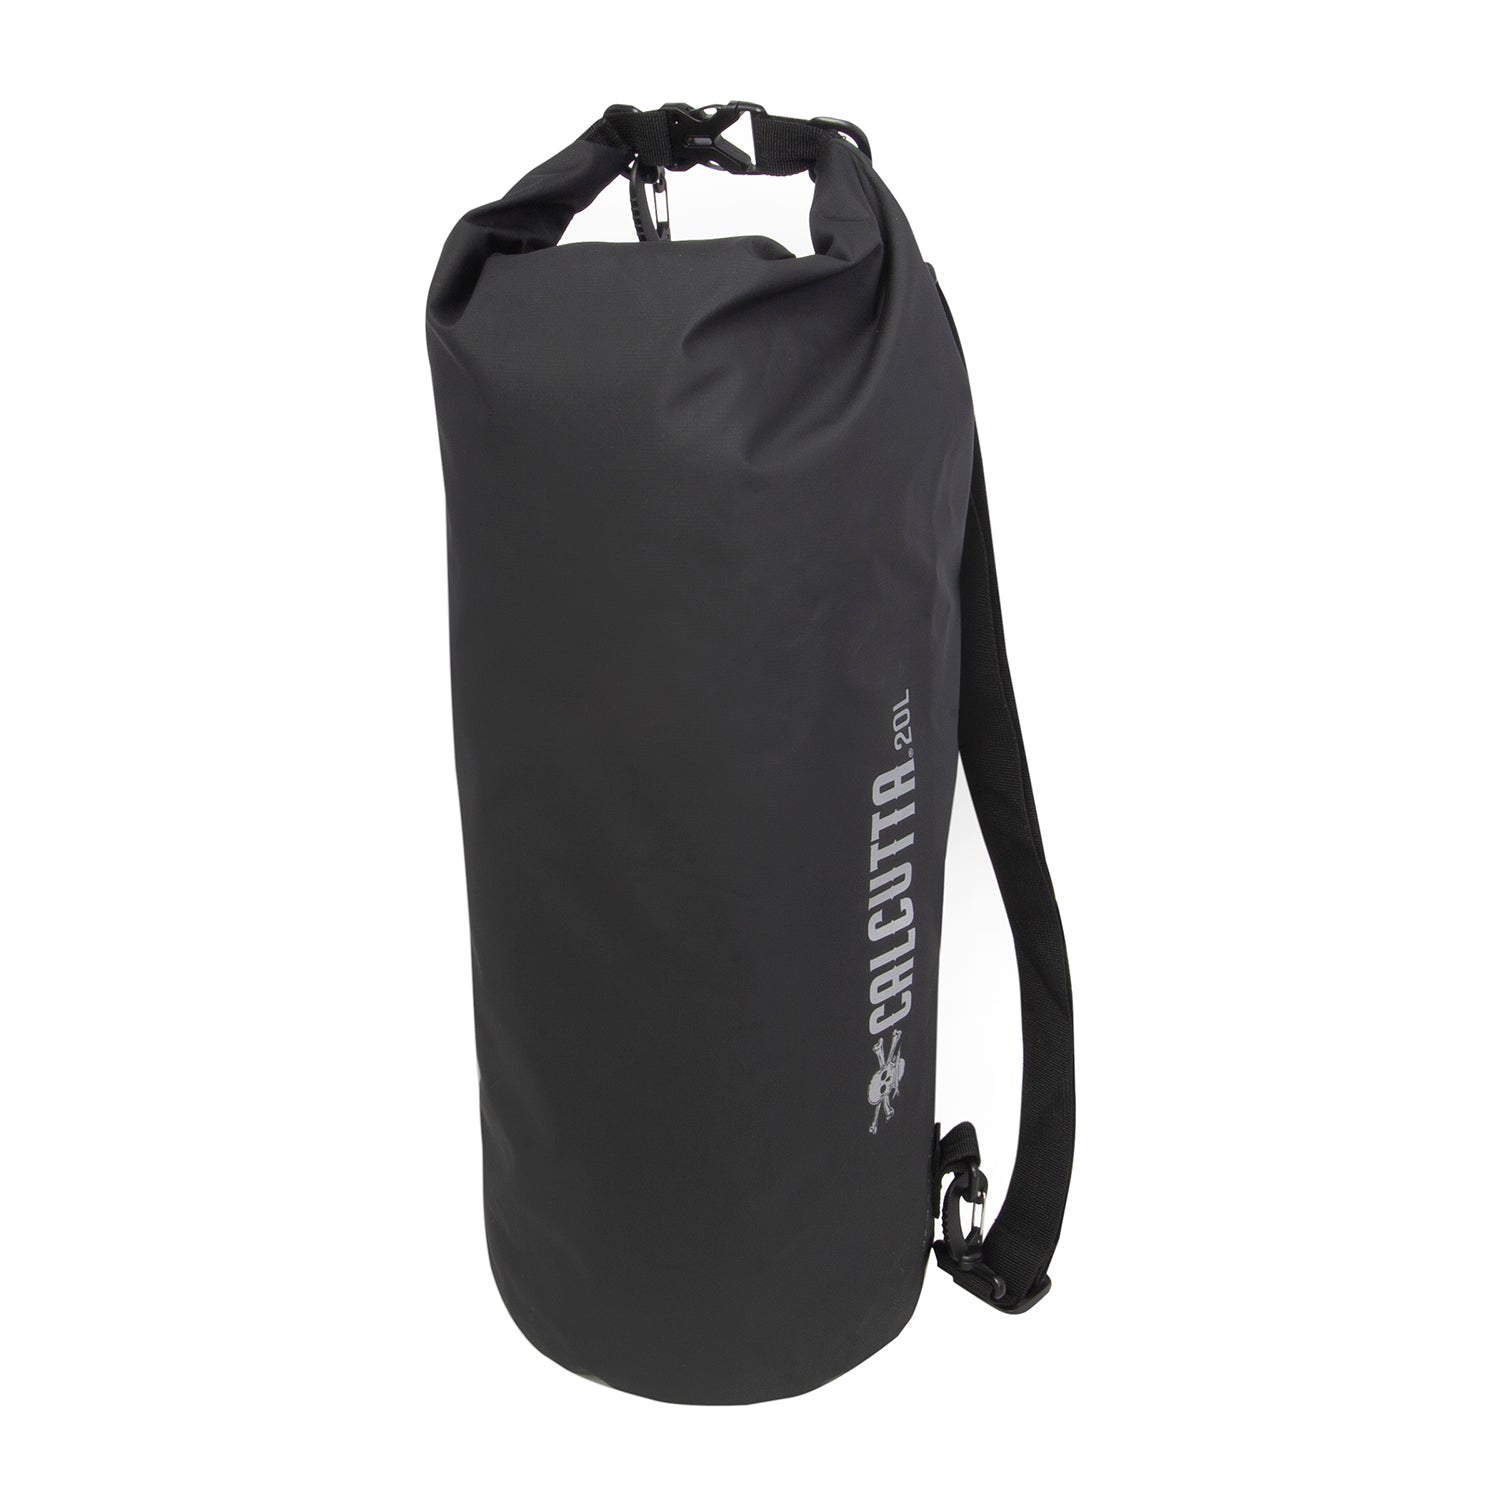 Calcutta CPDB-10BK Pack Series Dry Bag, 10 Liter, Black